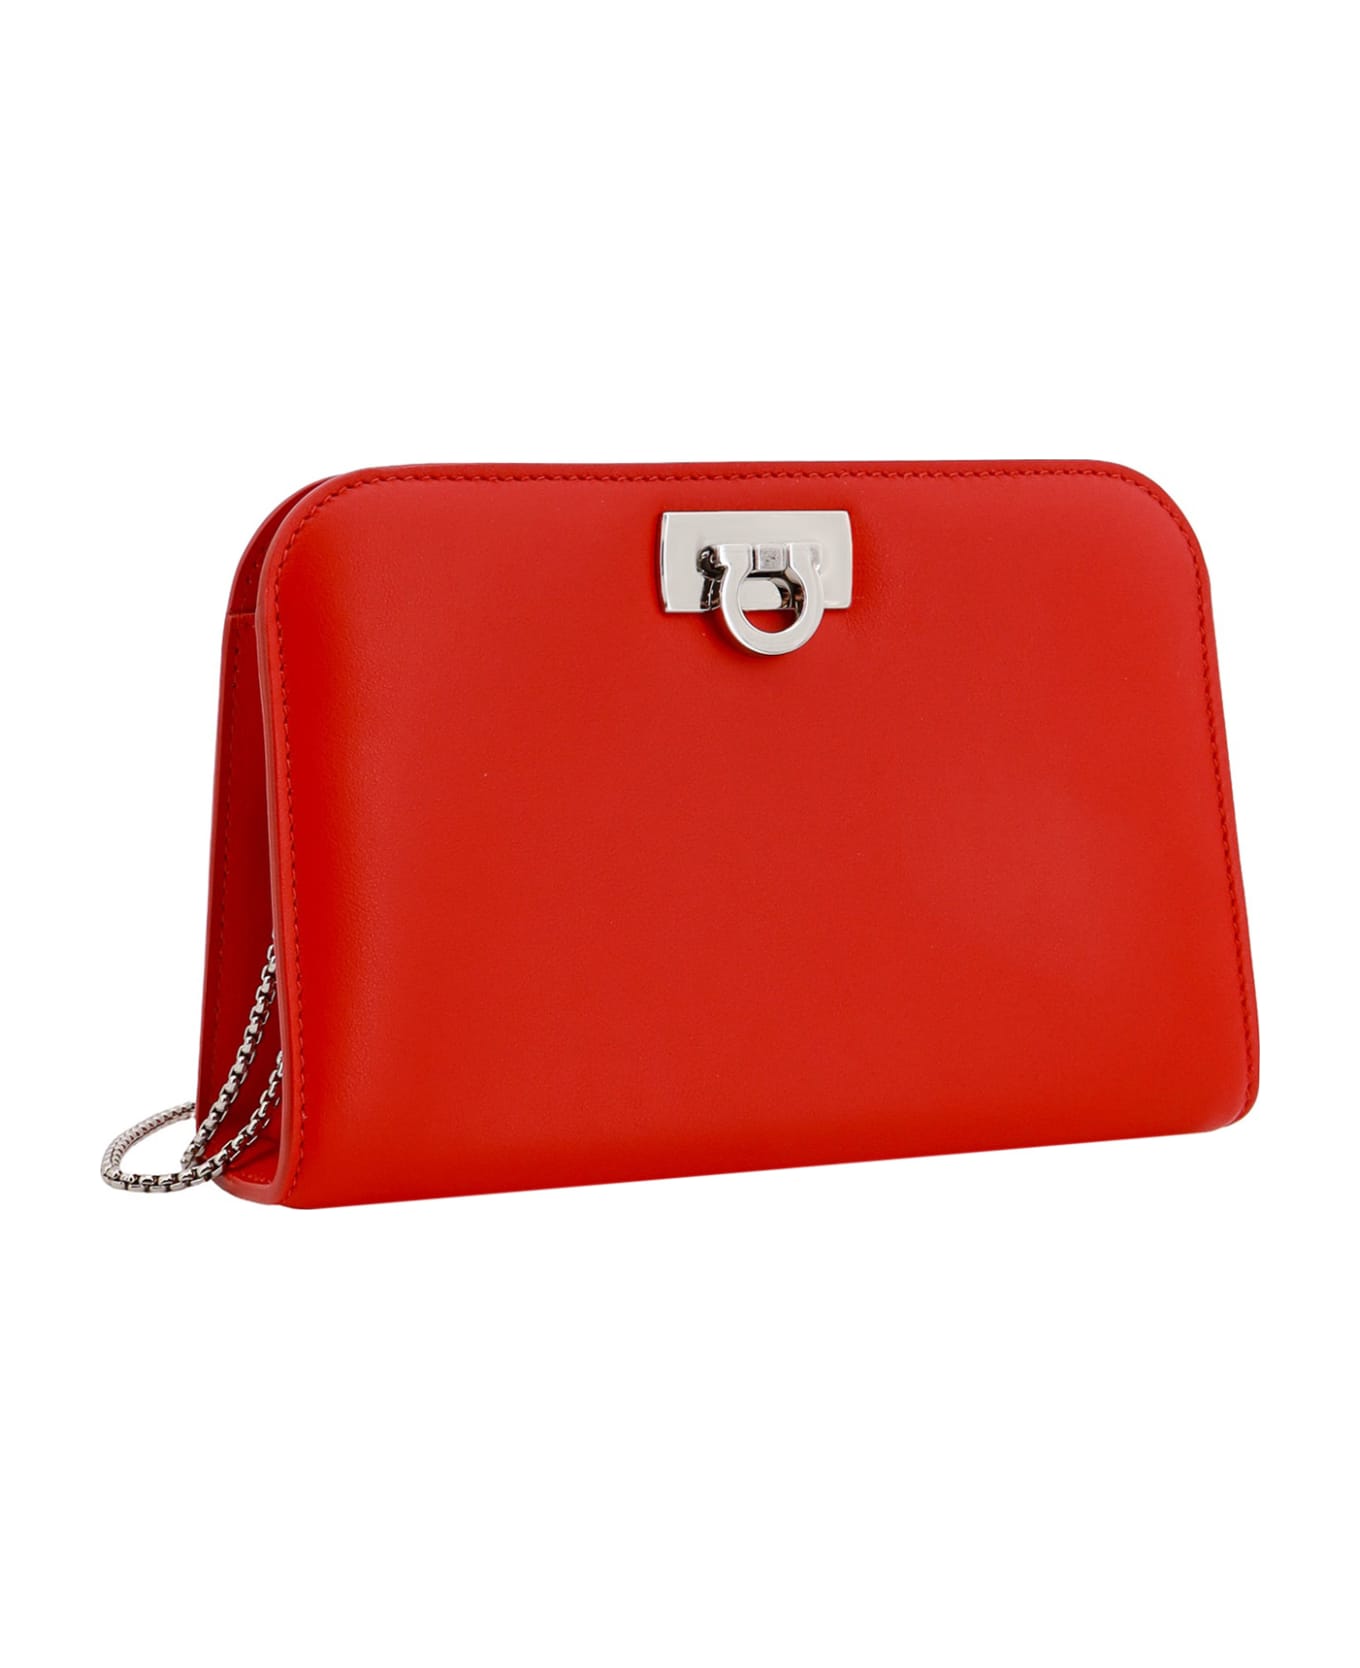 Ferragamo Diana Shoulder Bag - Red クラッチバッグ